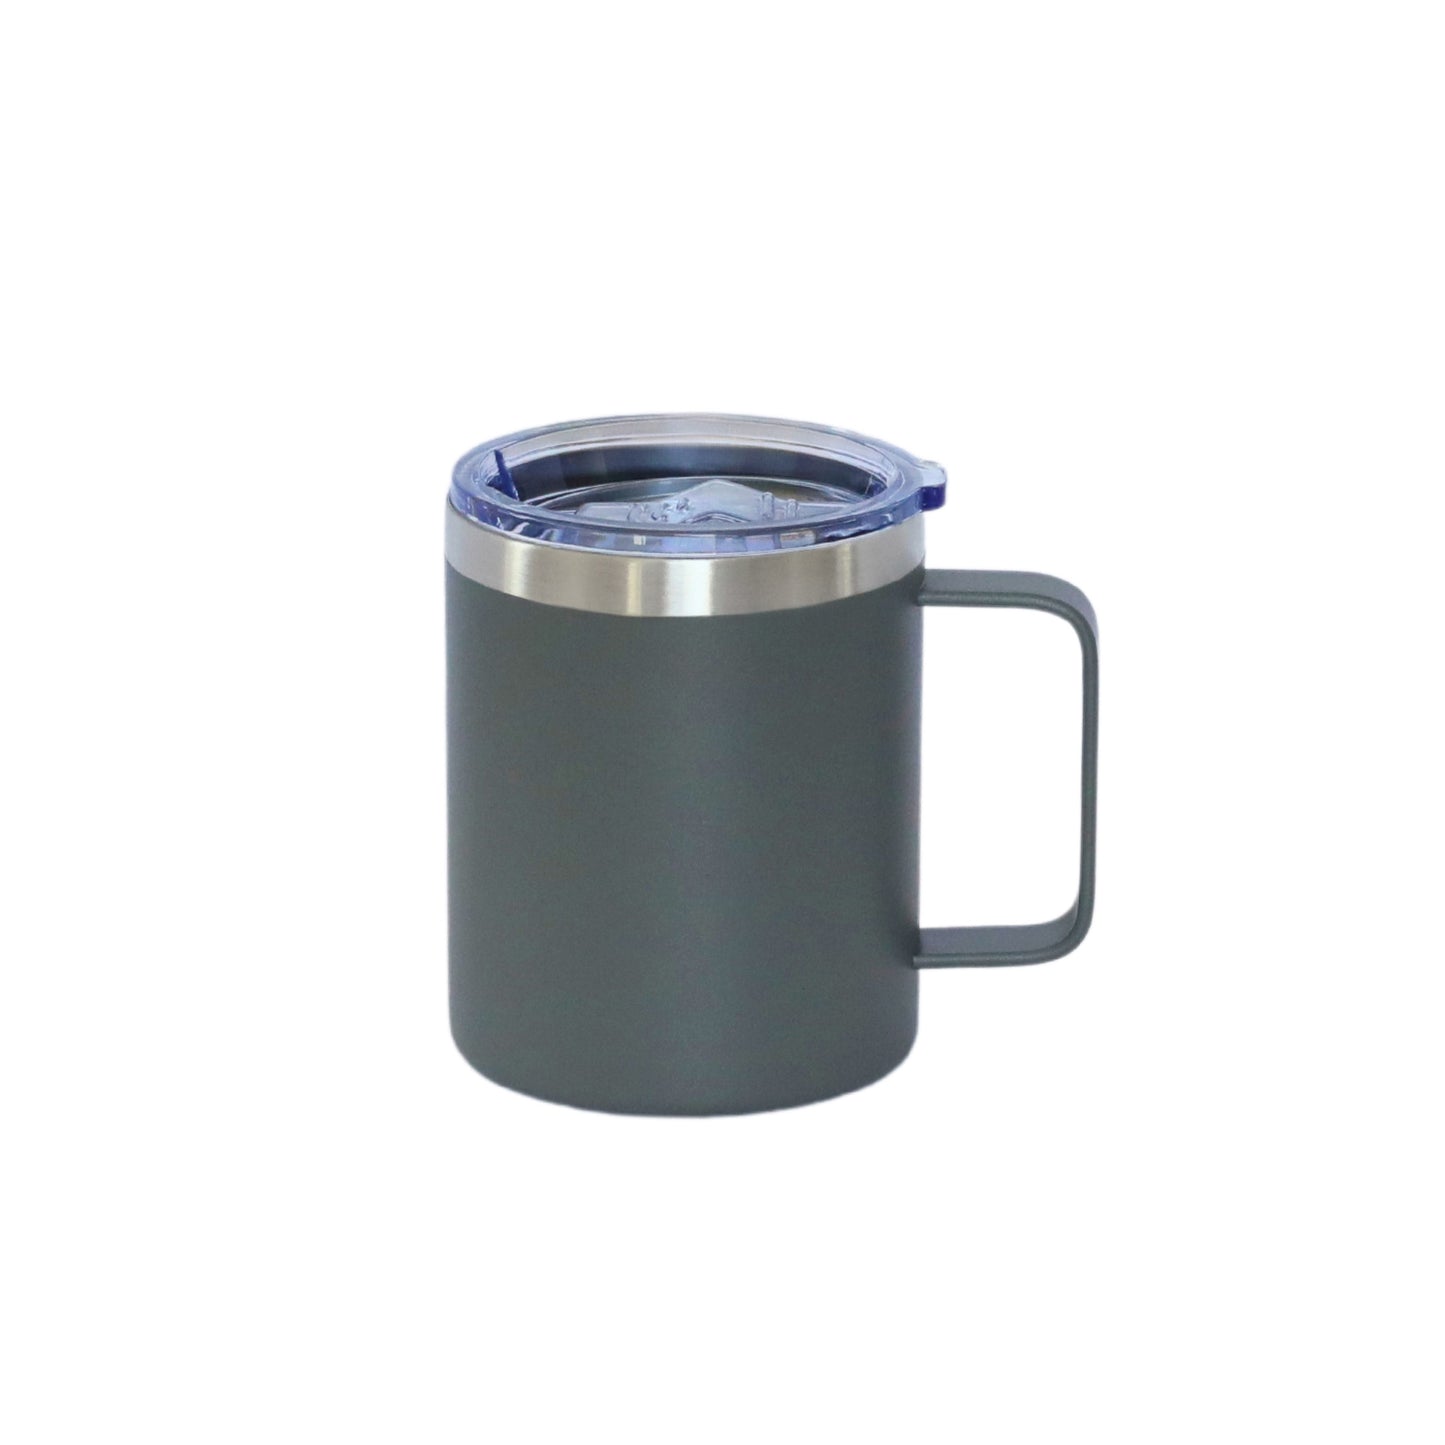 12 Oz Stainless Steel Travel Mug with Handle - Grey